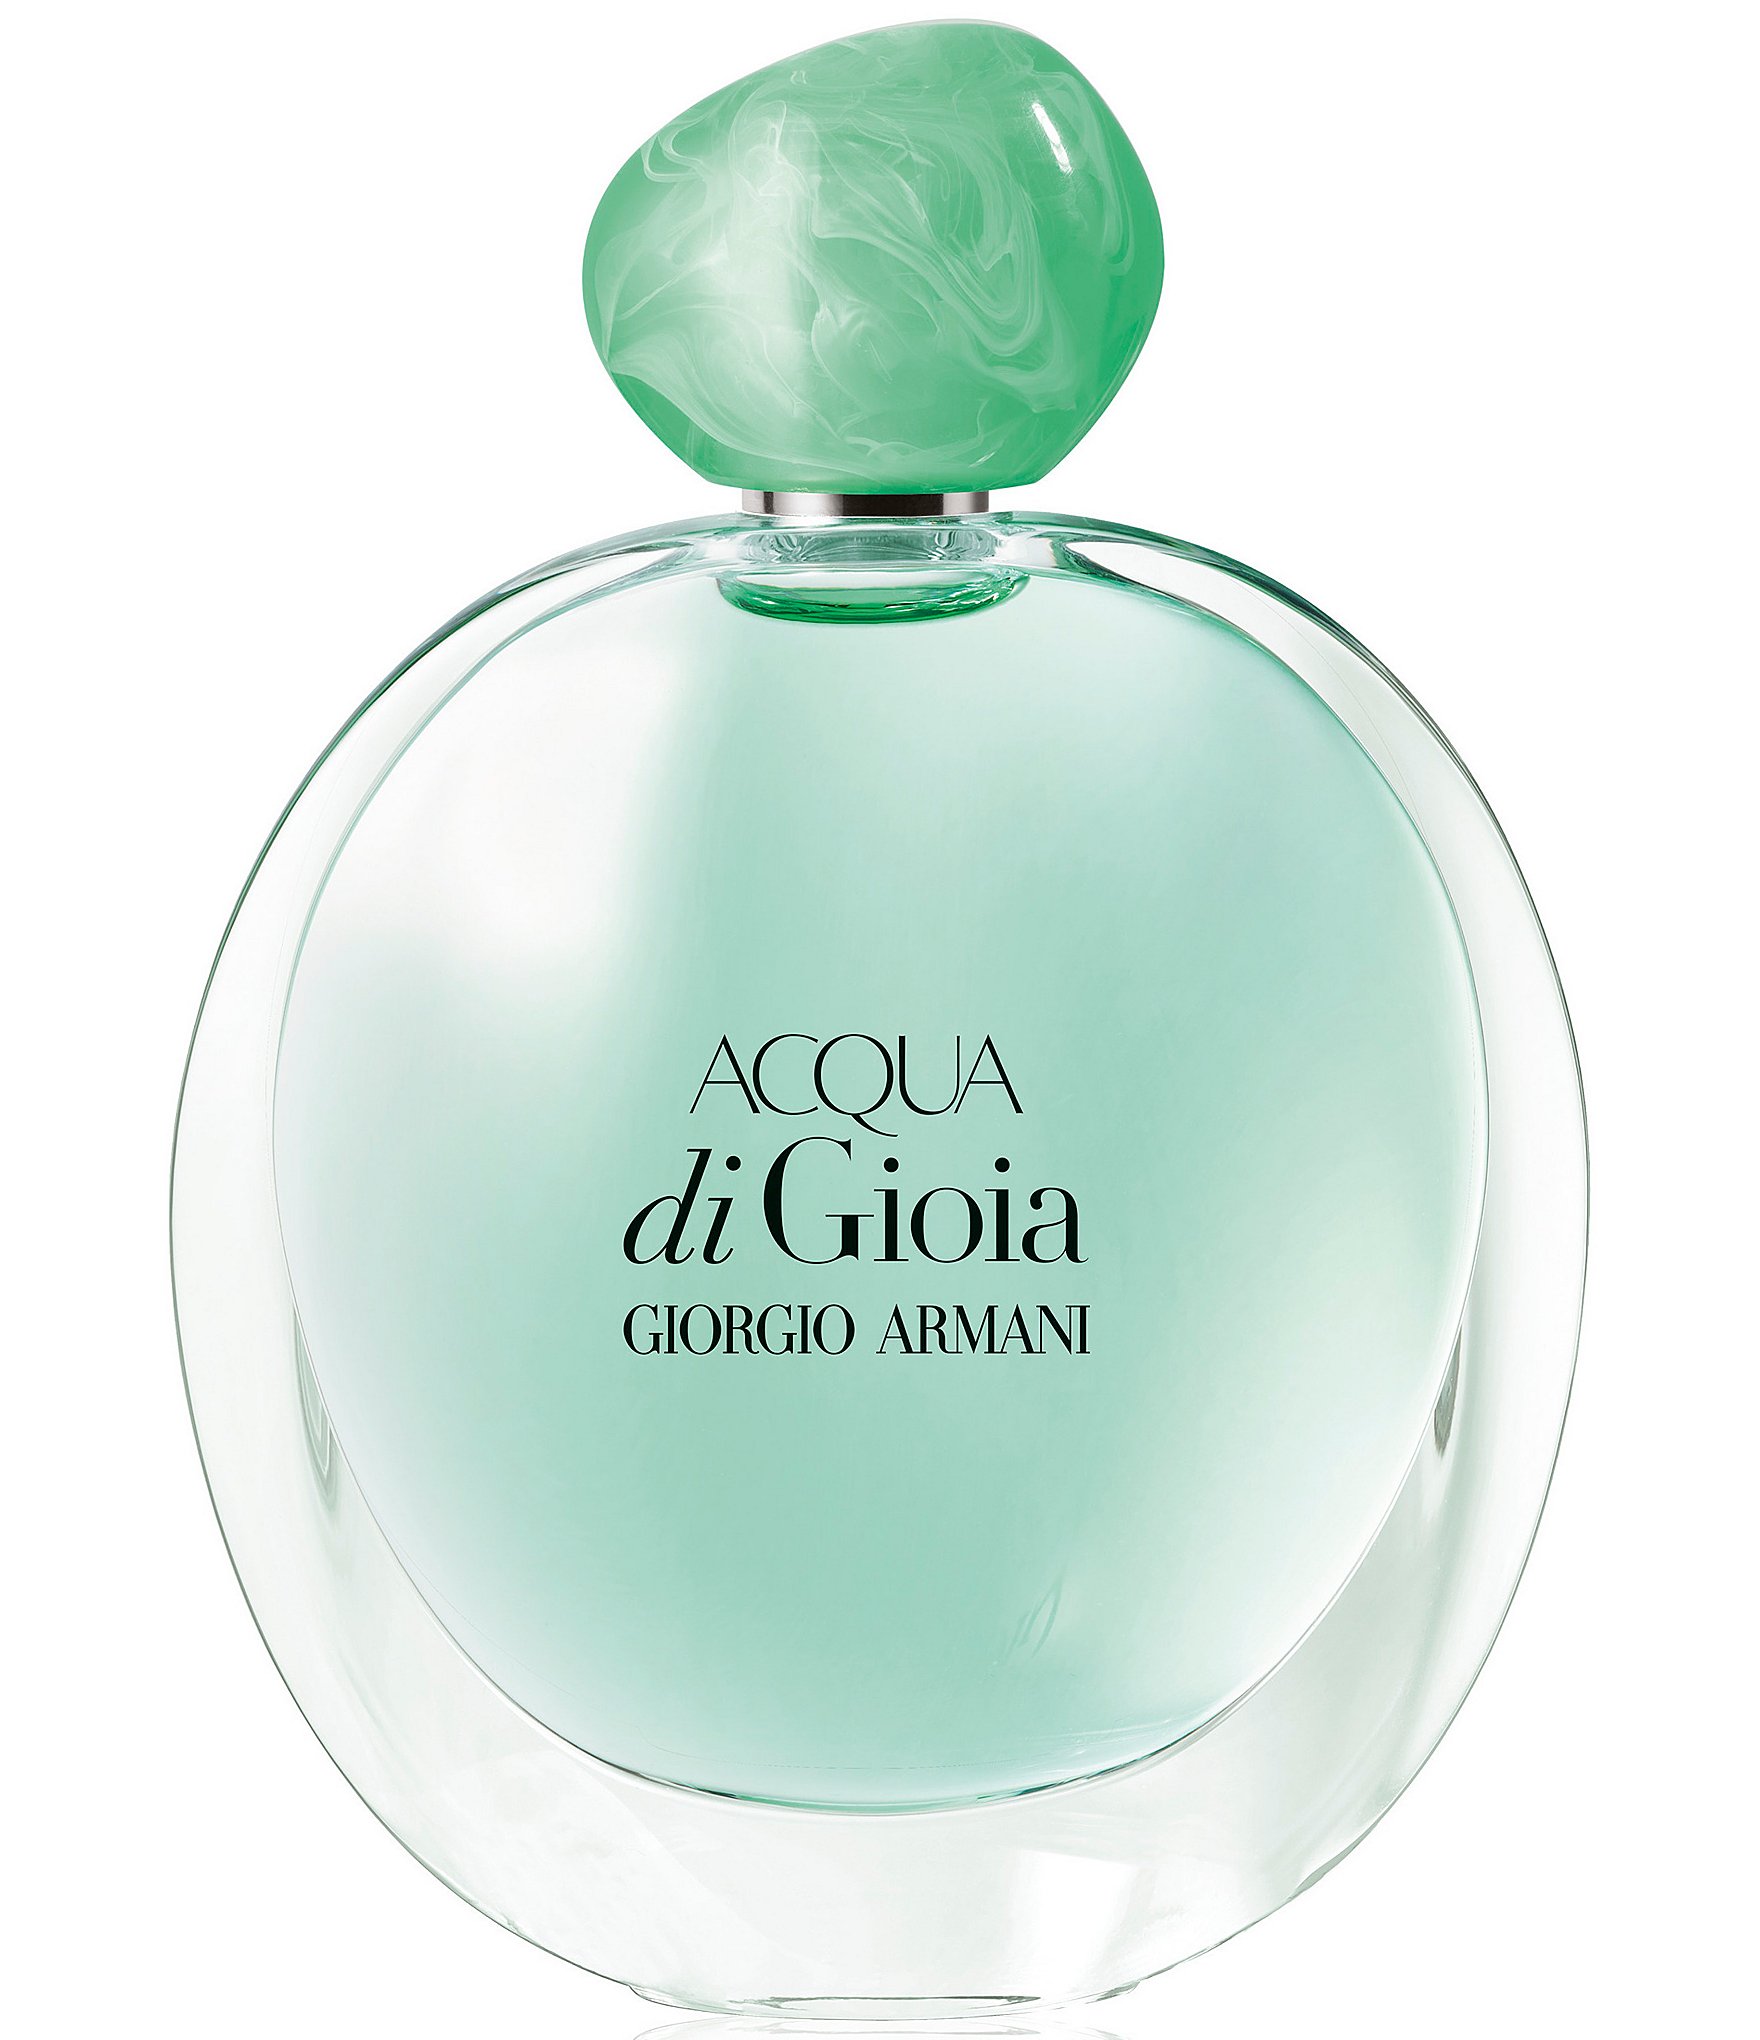 Keer terug Hesje Terugbetaling Giorgio Armani ARMANI beauty Acqua di Gioia Eau de Parfum Spray | Dillard's